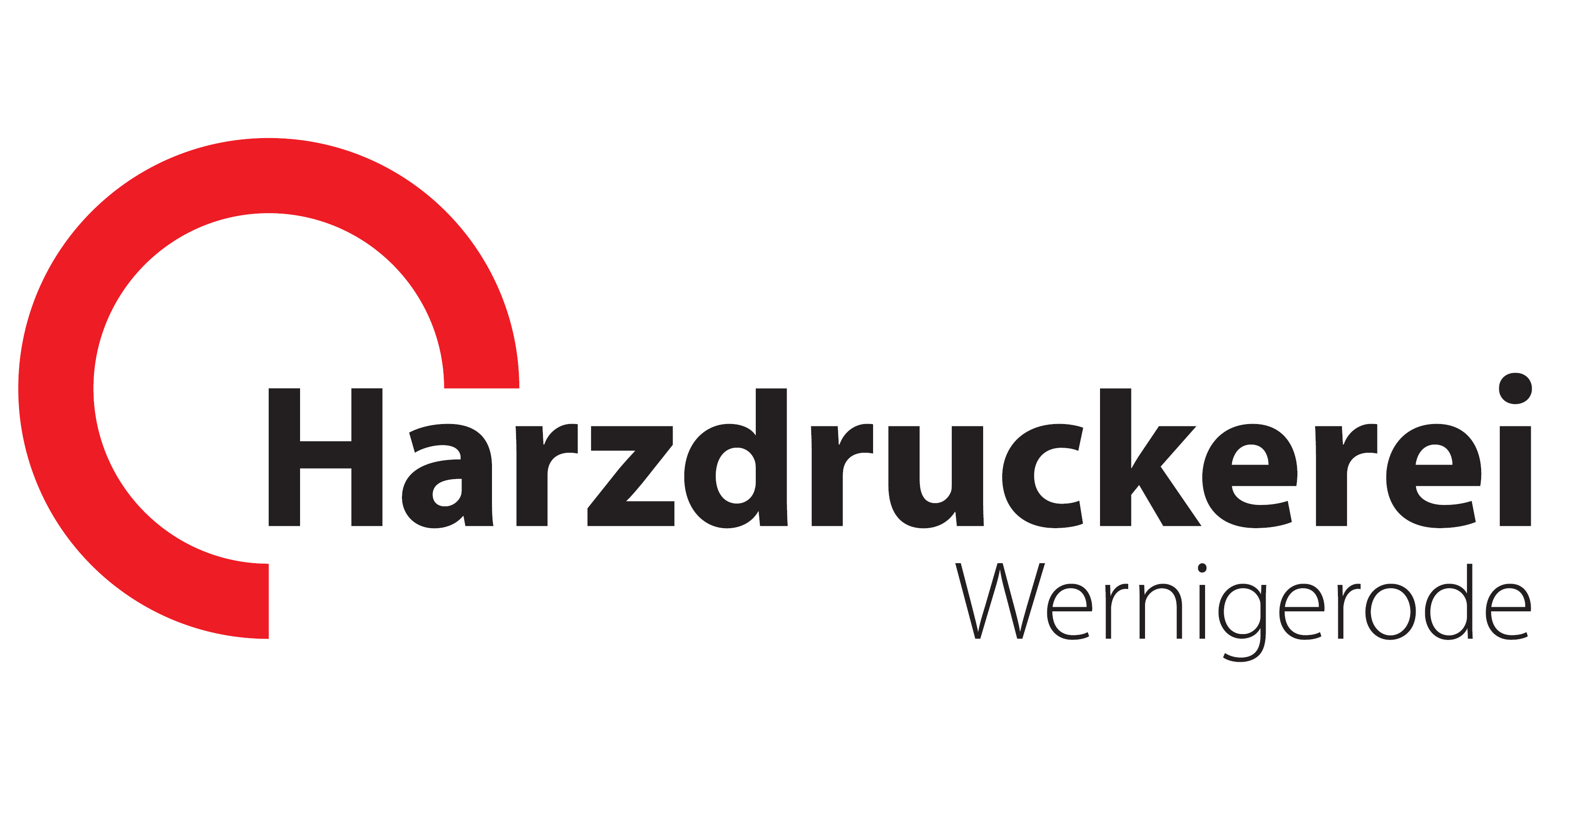 Harzdruckerei_Logo